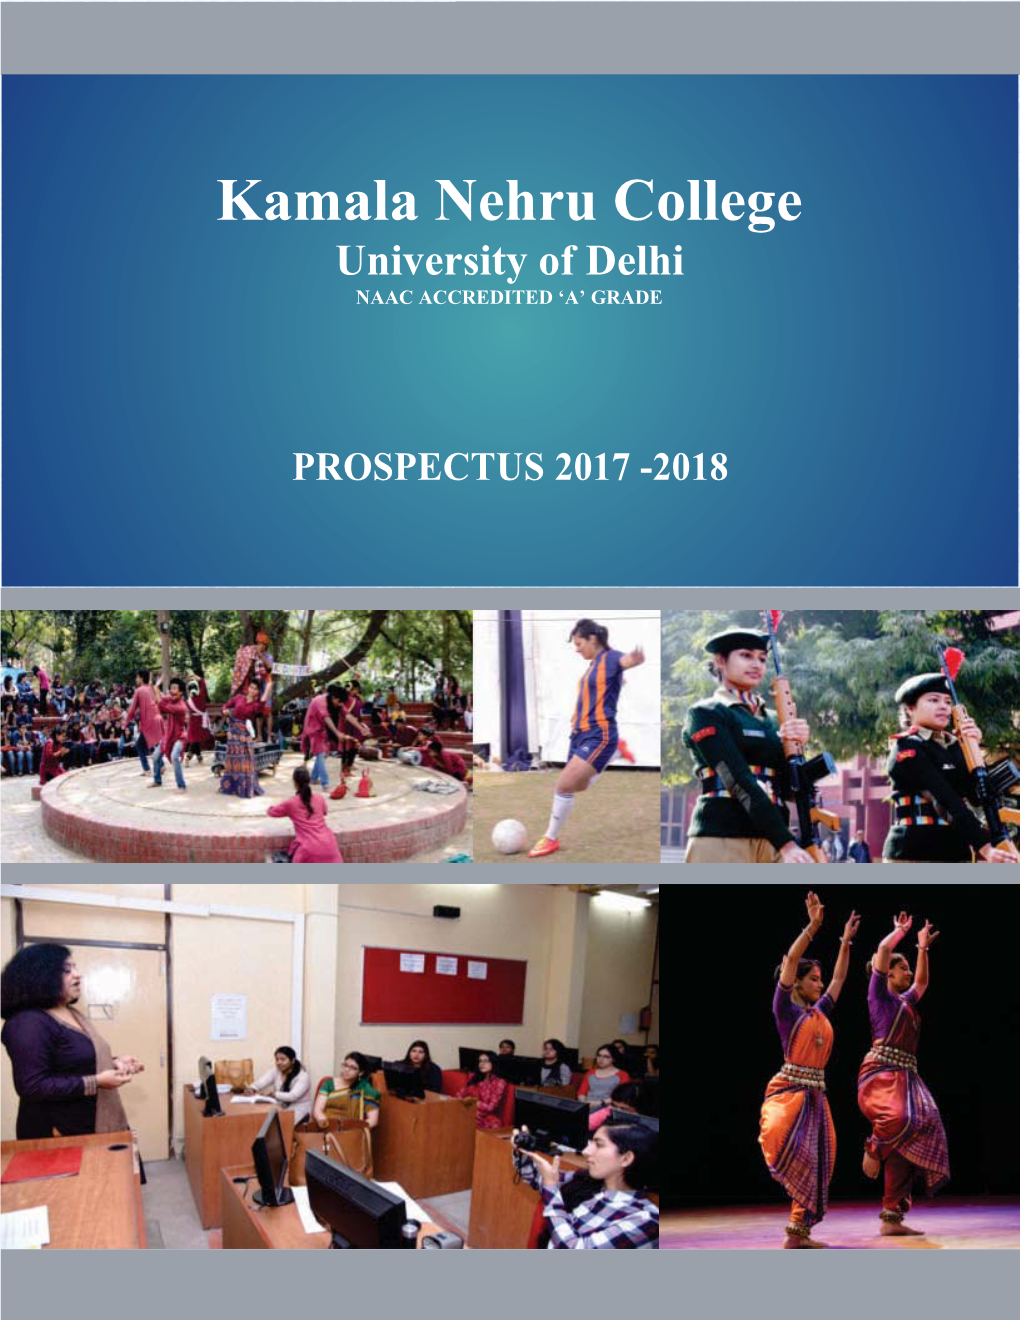 Kamala Nehru College University of Delhi NAAC ACCREDITED ‘A’ GRADE